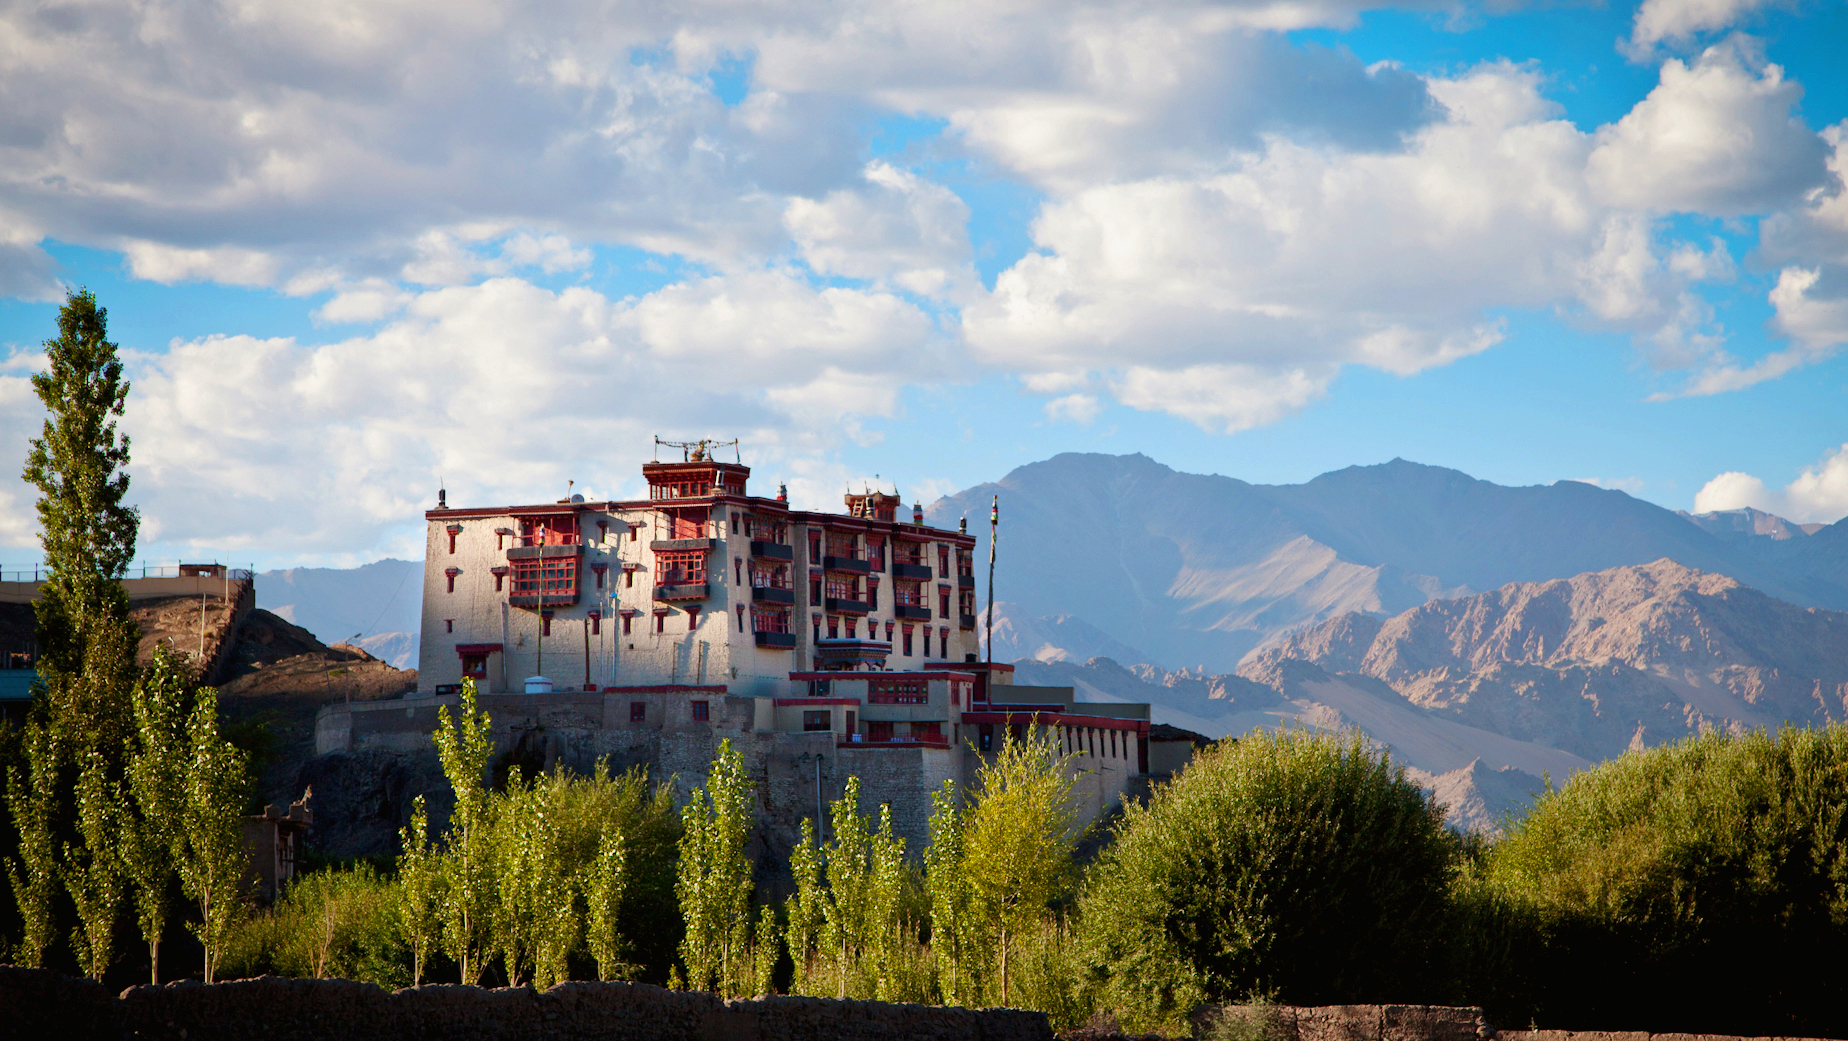 Stok Palace Leh Ladakh